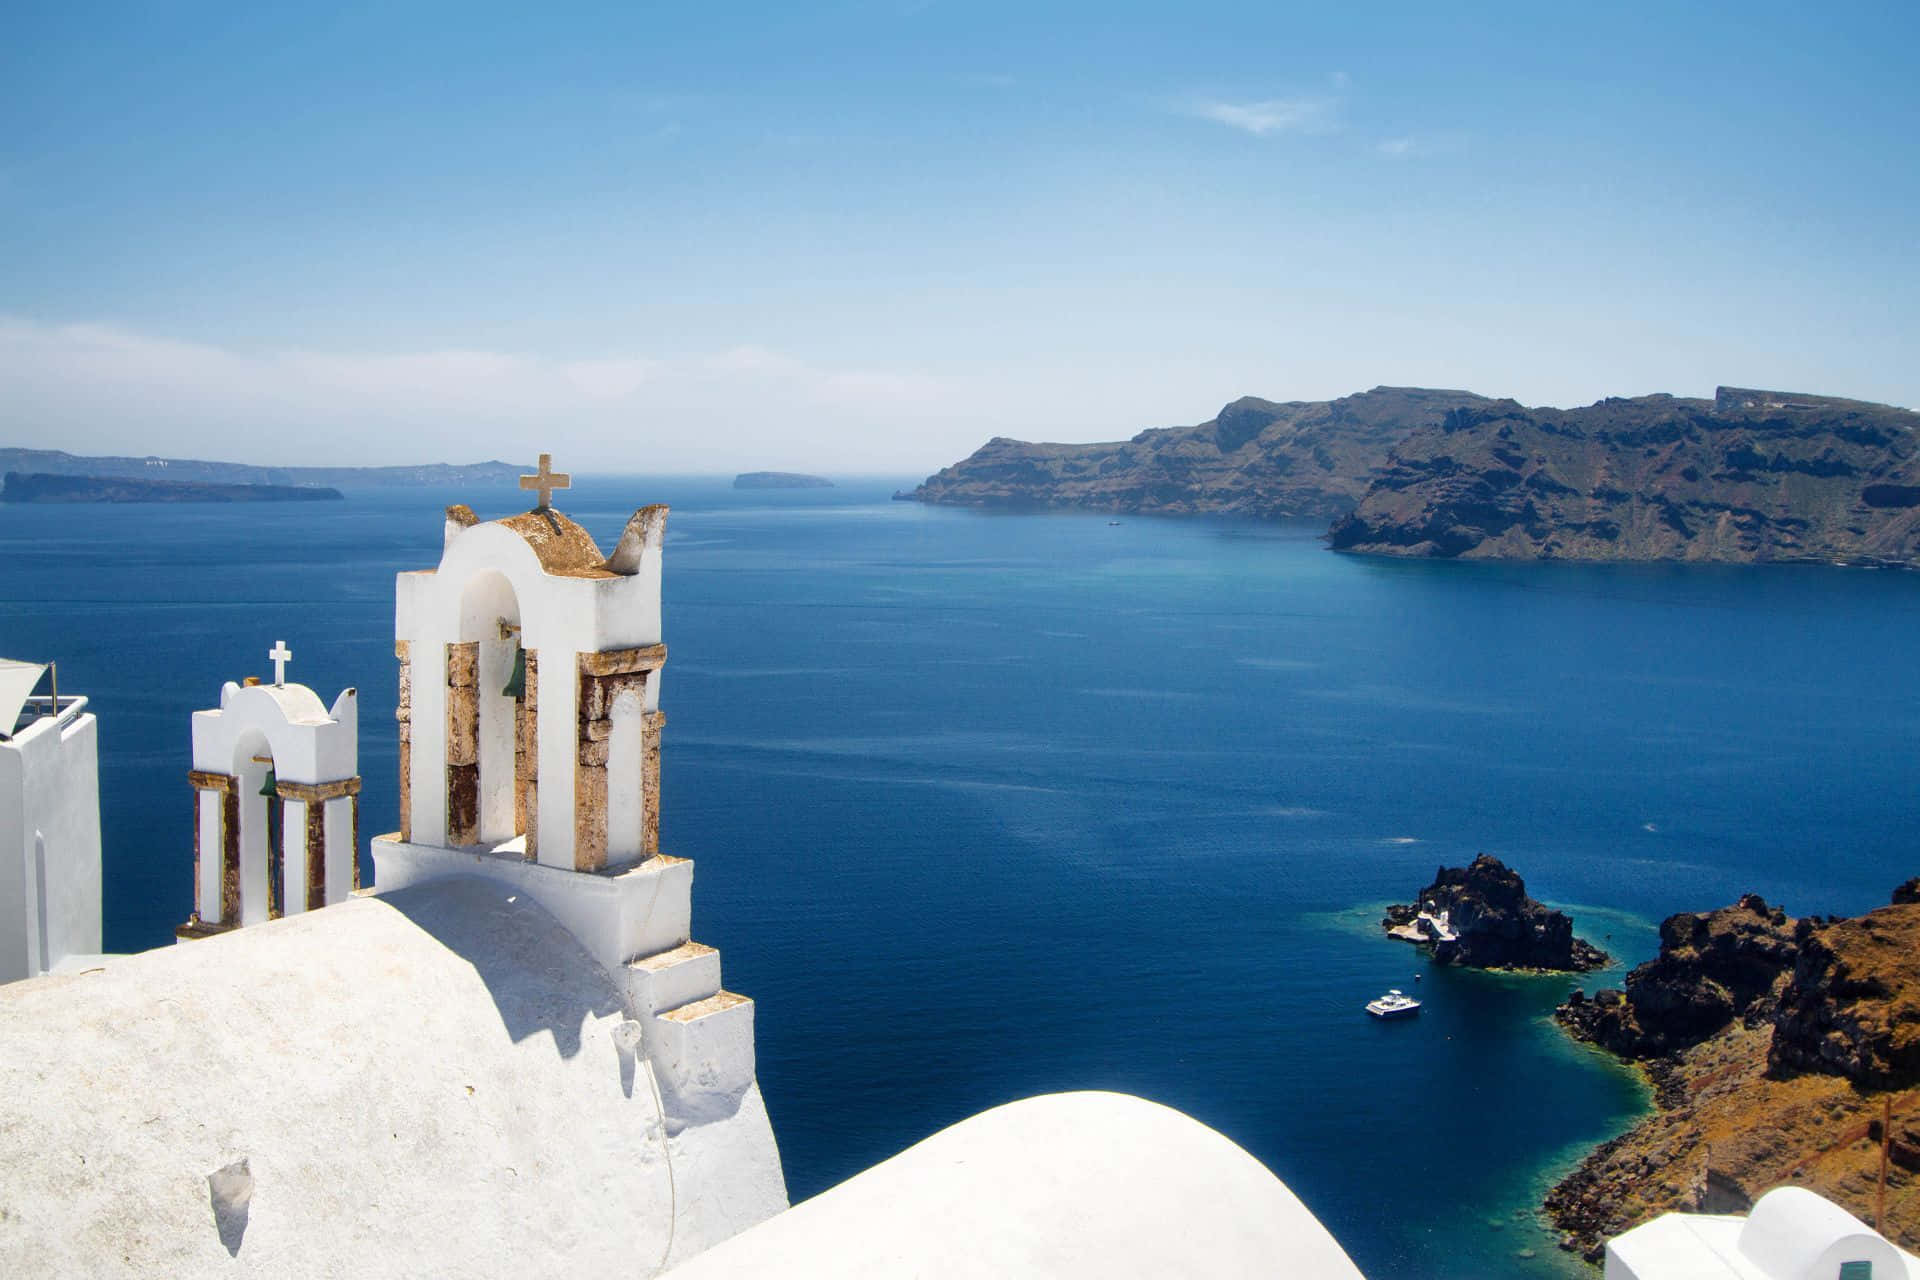 "Greece offers an abundance breathtakingly beautiful natural scenery"